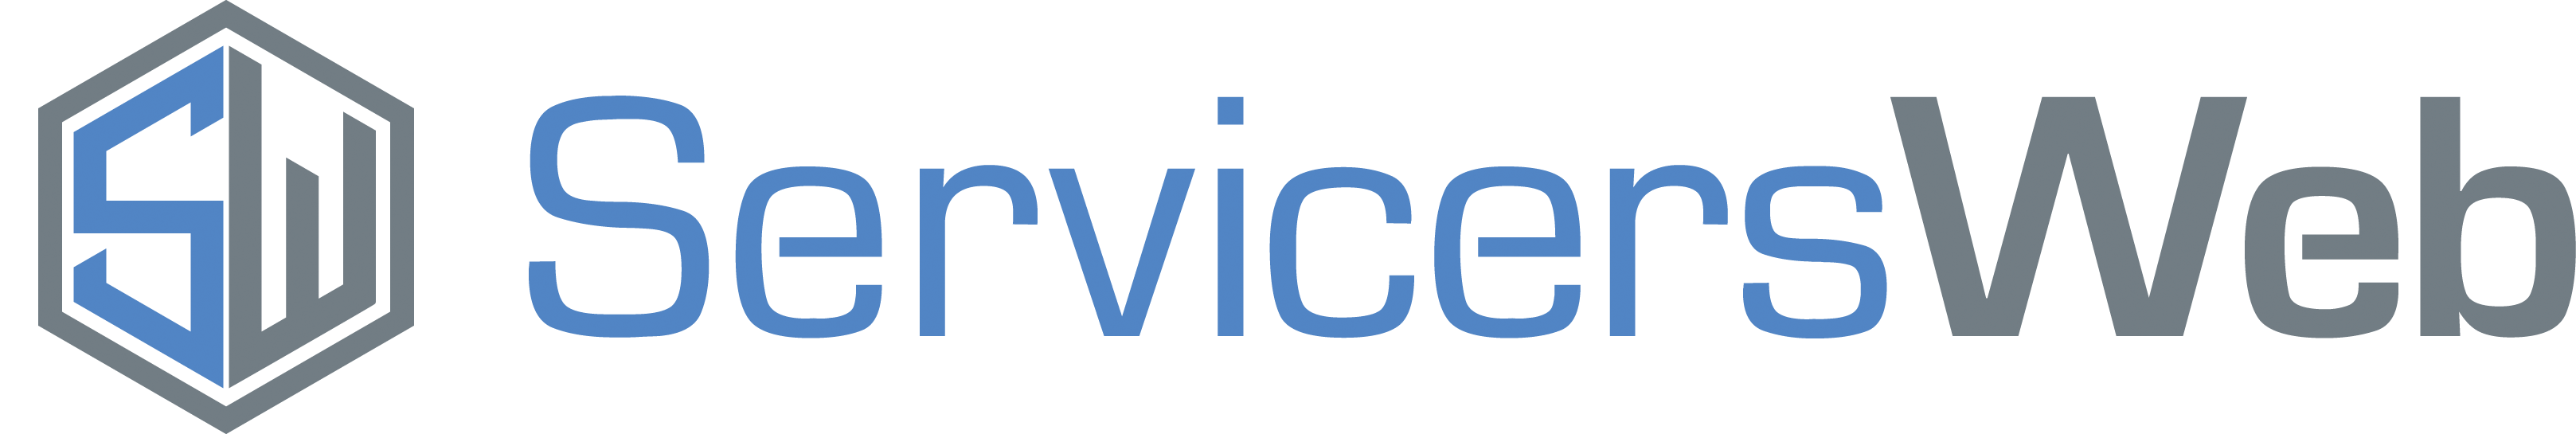 Servicers Web Logo